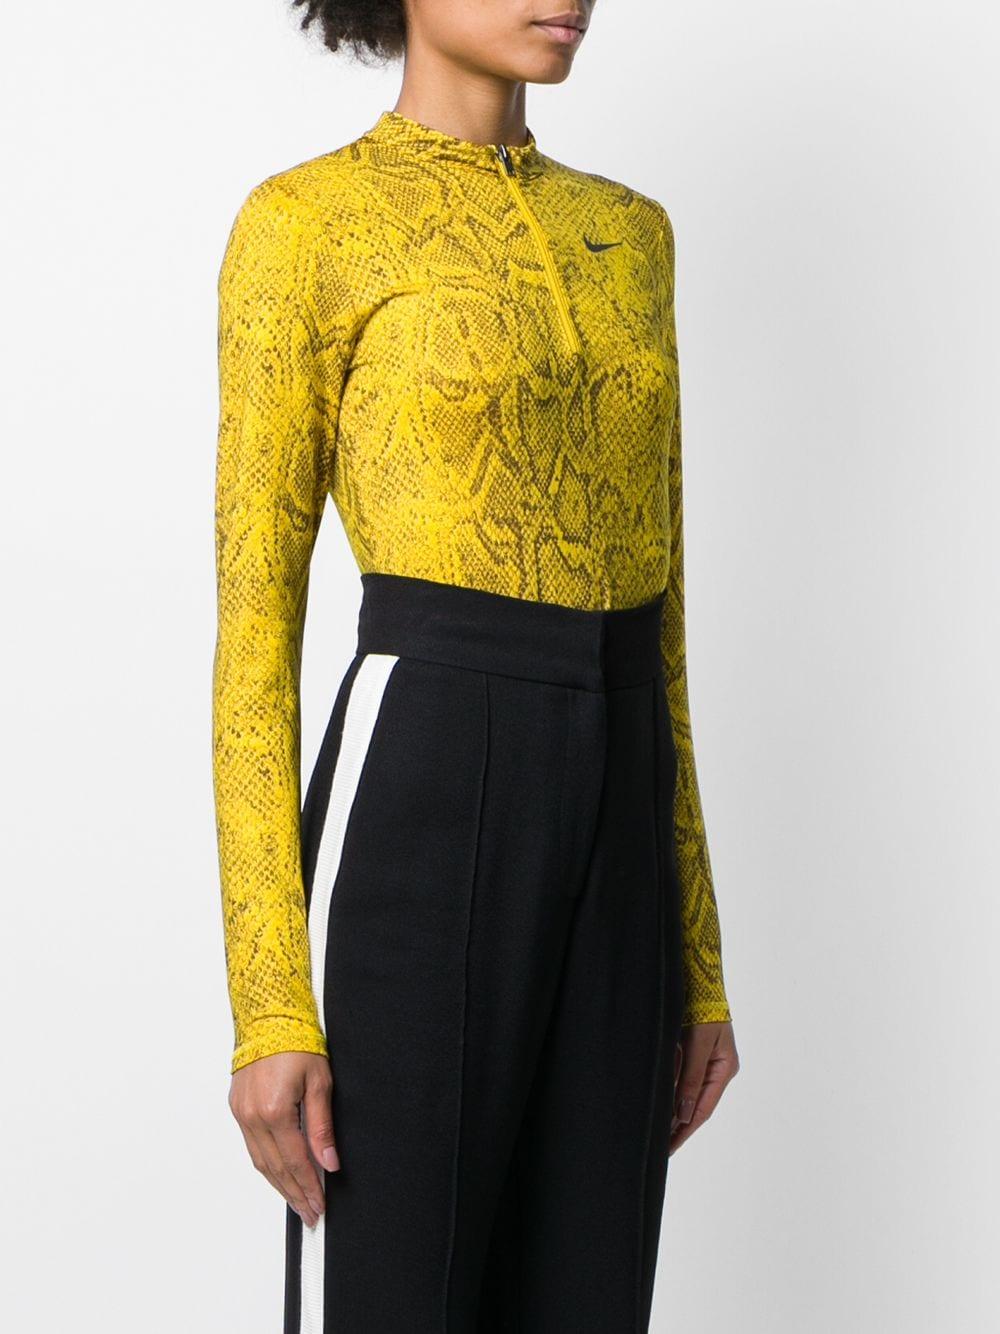 Nike Synthetic Snake-effect Print Bodysuit in Yellow - Lyst